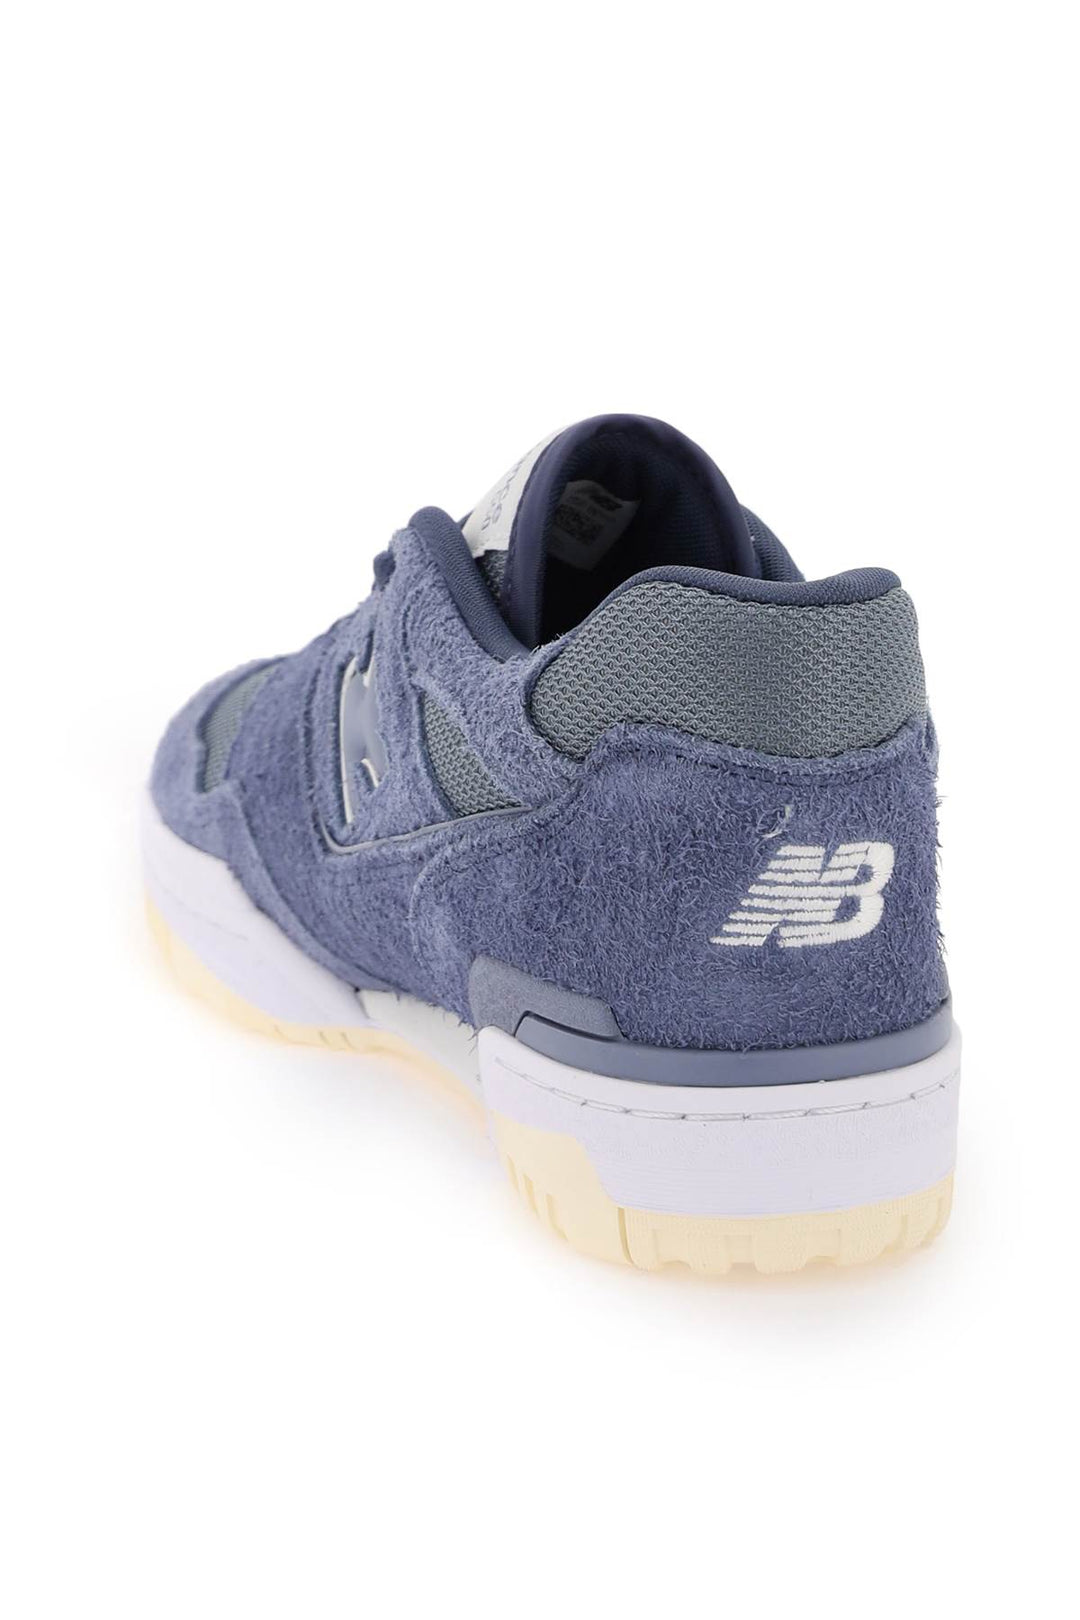 New Balance 550 Sneakers   Blu